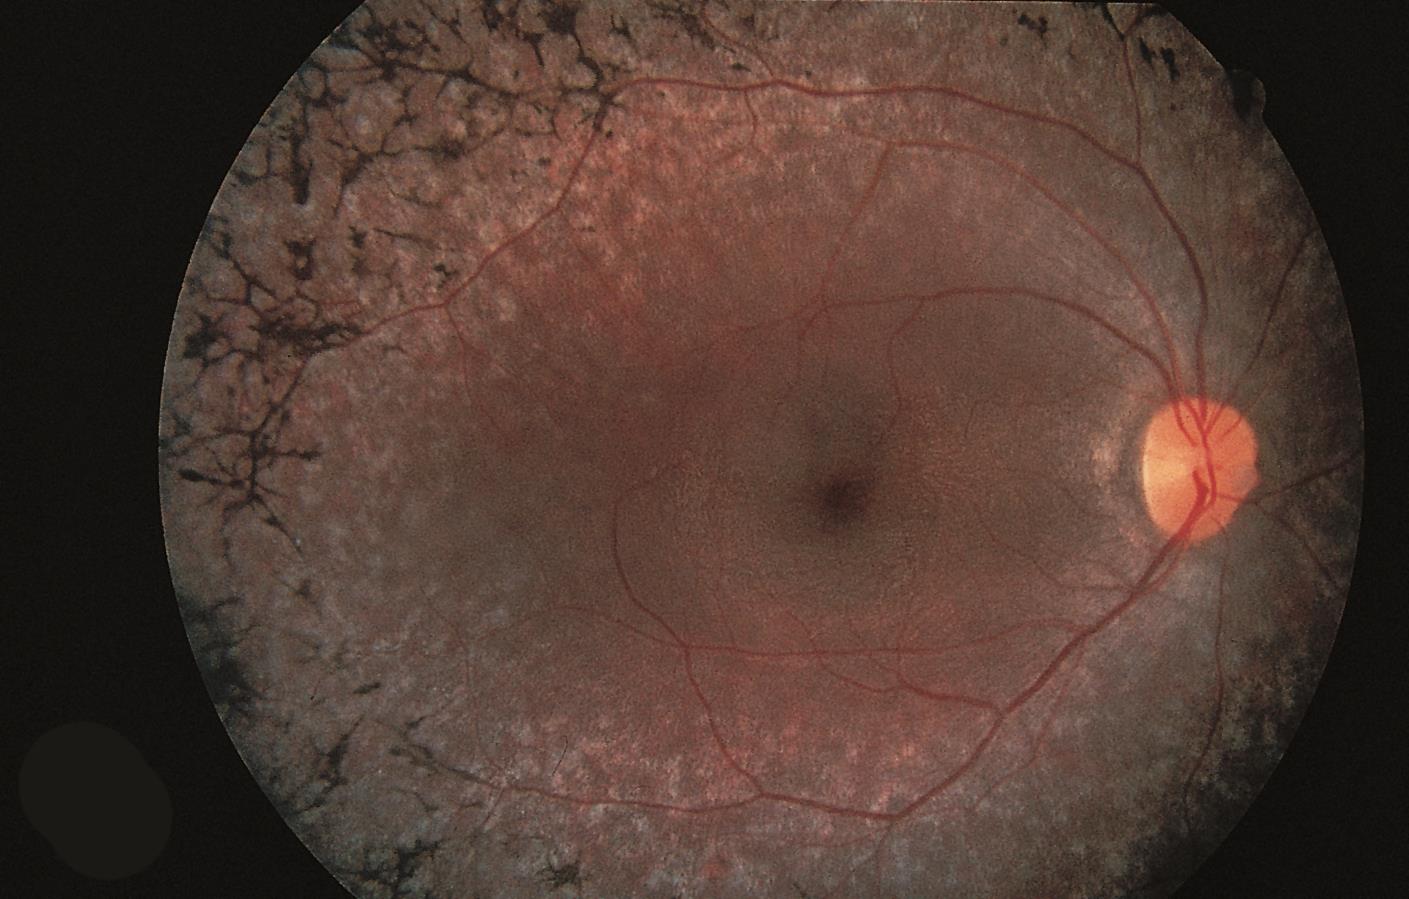 new research on retinitis pigmentosa